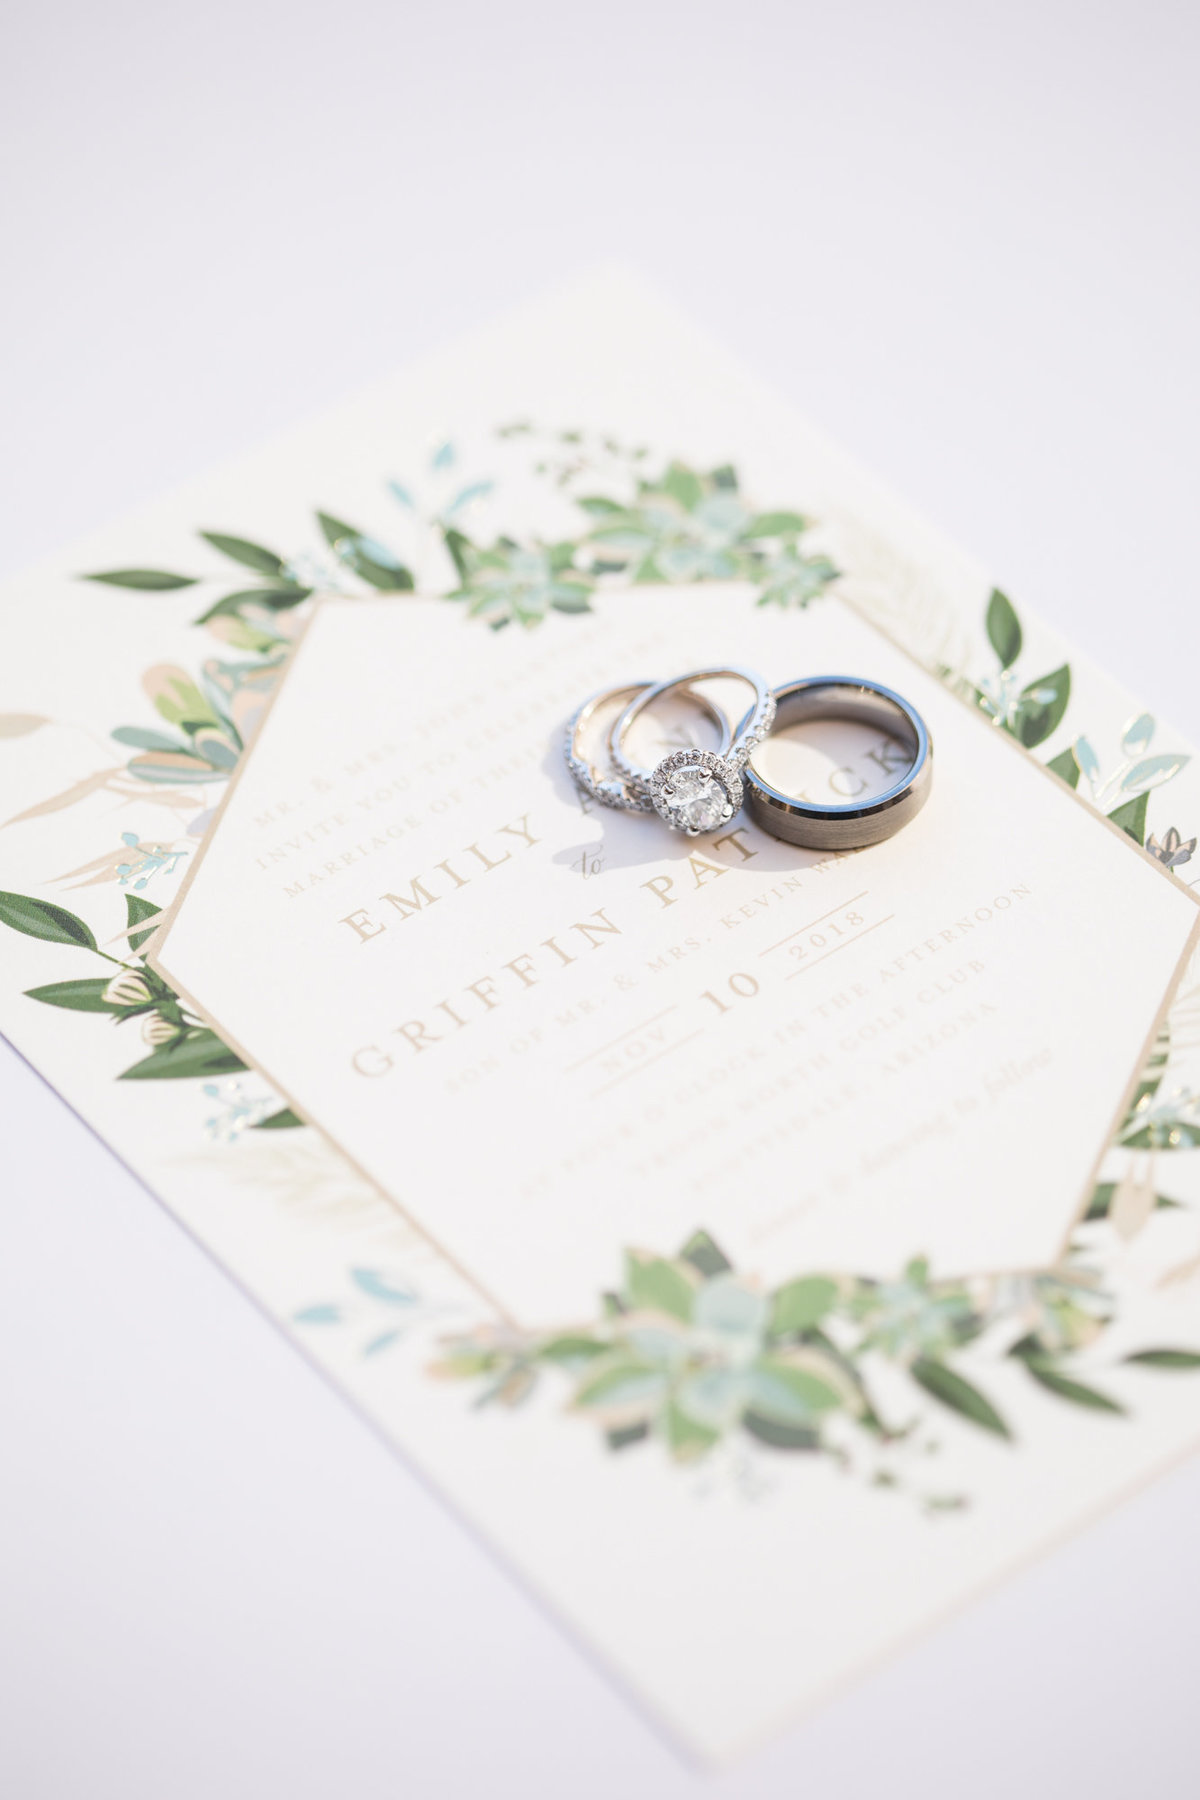 scottsdale-desert-wedding-rings-on-wedding-invitation